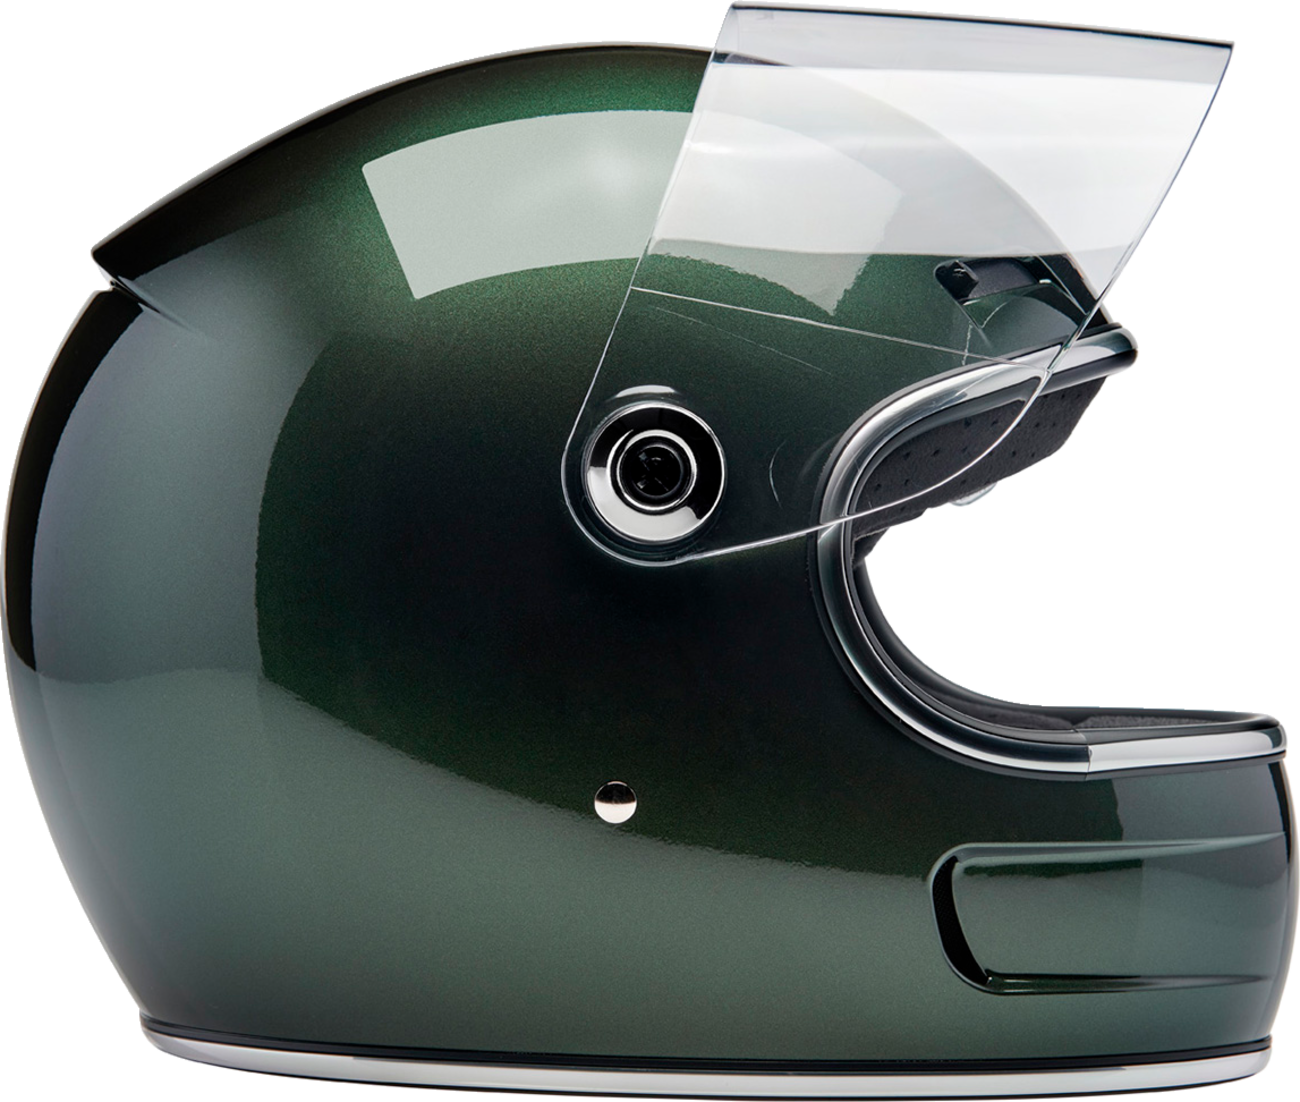 BILTWELL Gringo SV Helmet - Metallic Sierra Green - Medium 1006-324-503